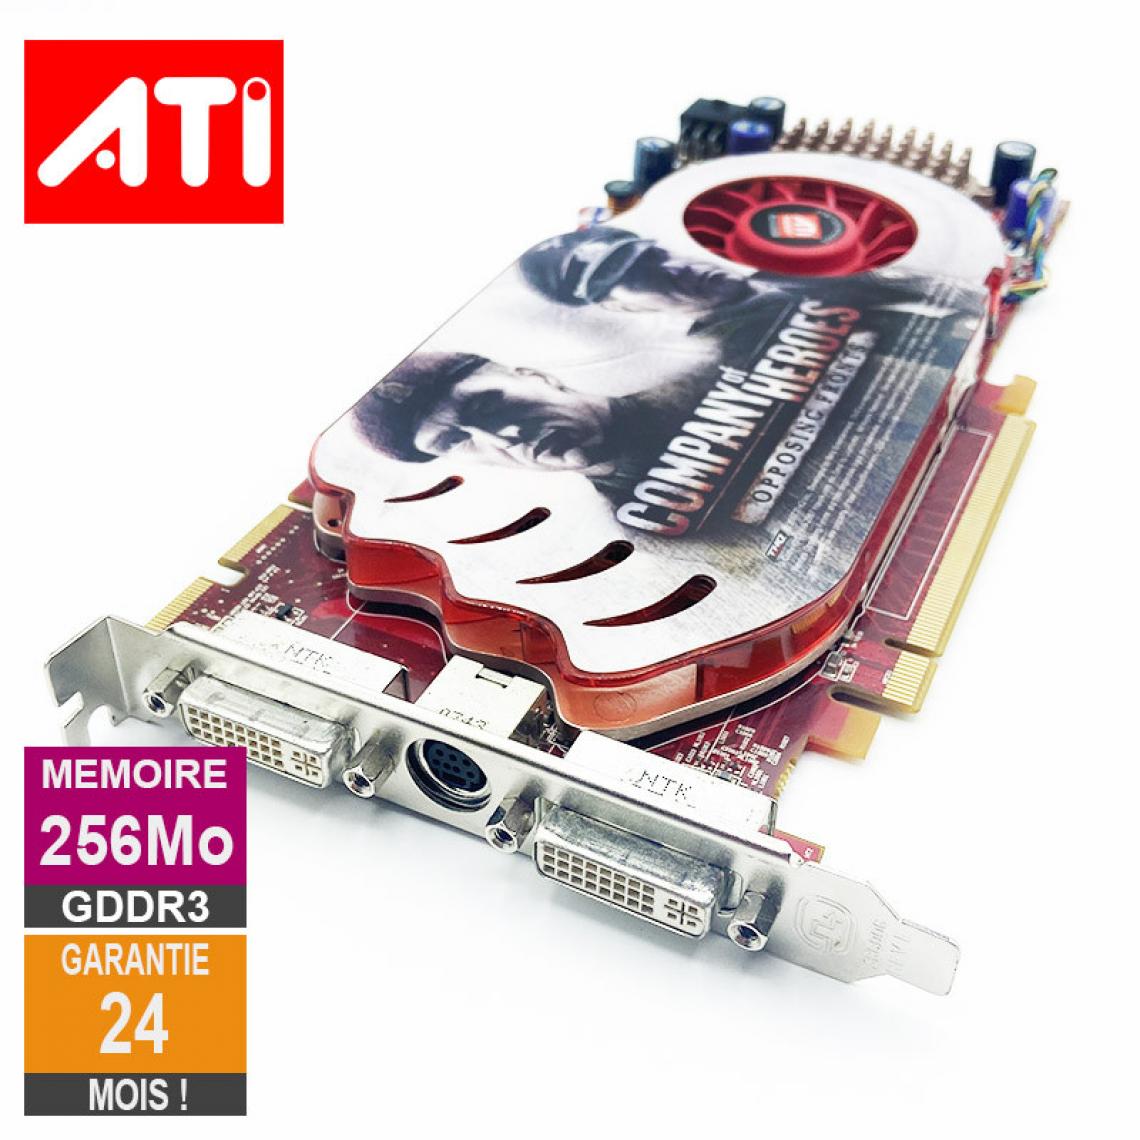 Ati - Carte graphique ATI Radeon HD 3850 256Mo DVI S-Video ATI-102-B34003B - Carte Graphique NVIDIA